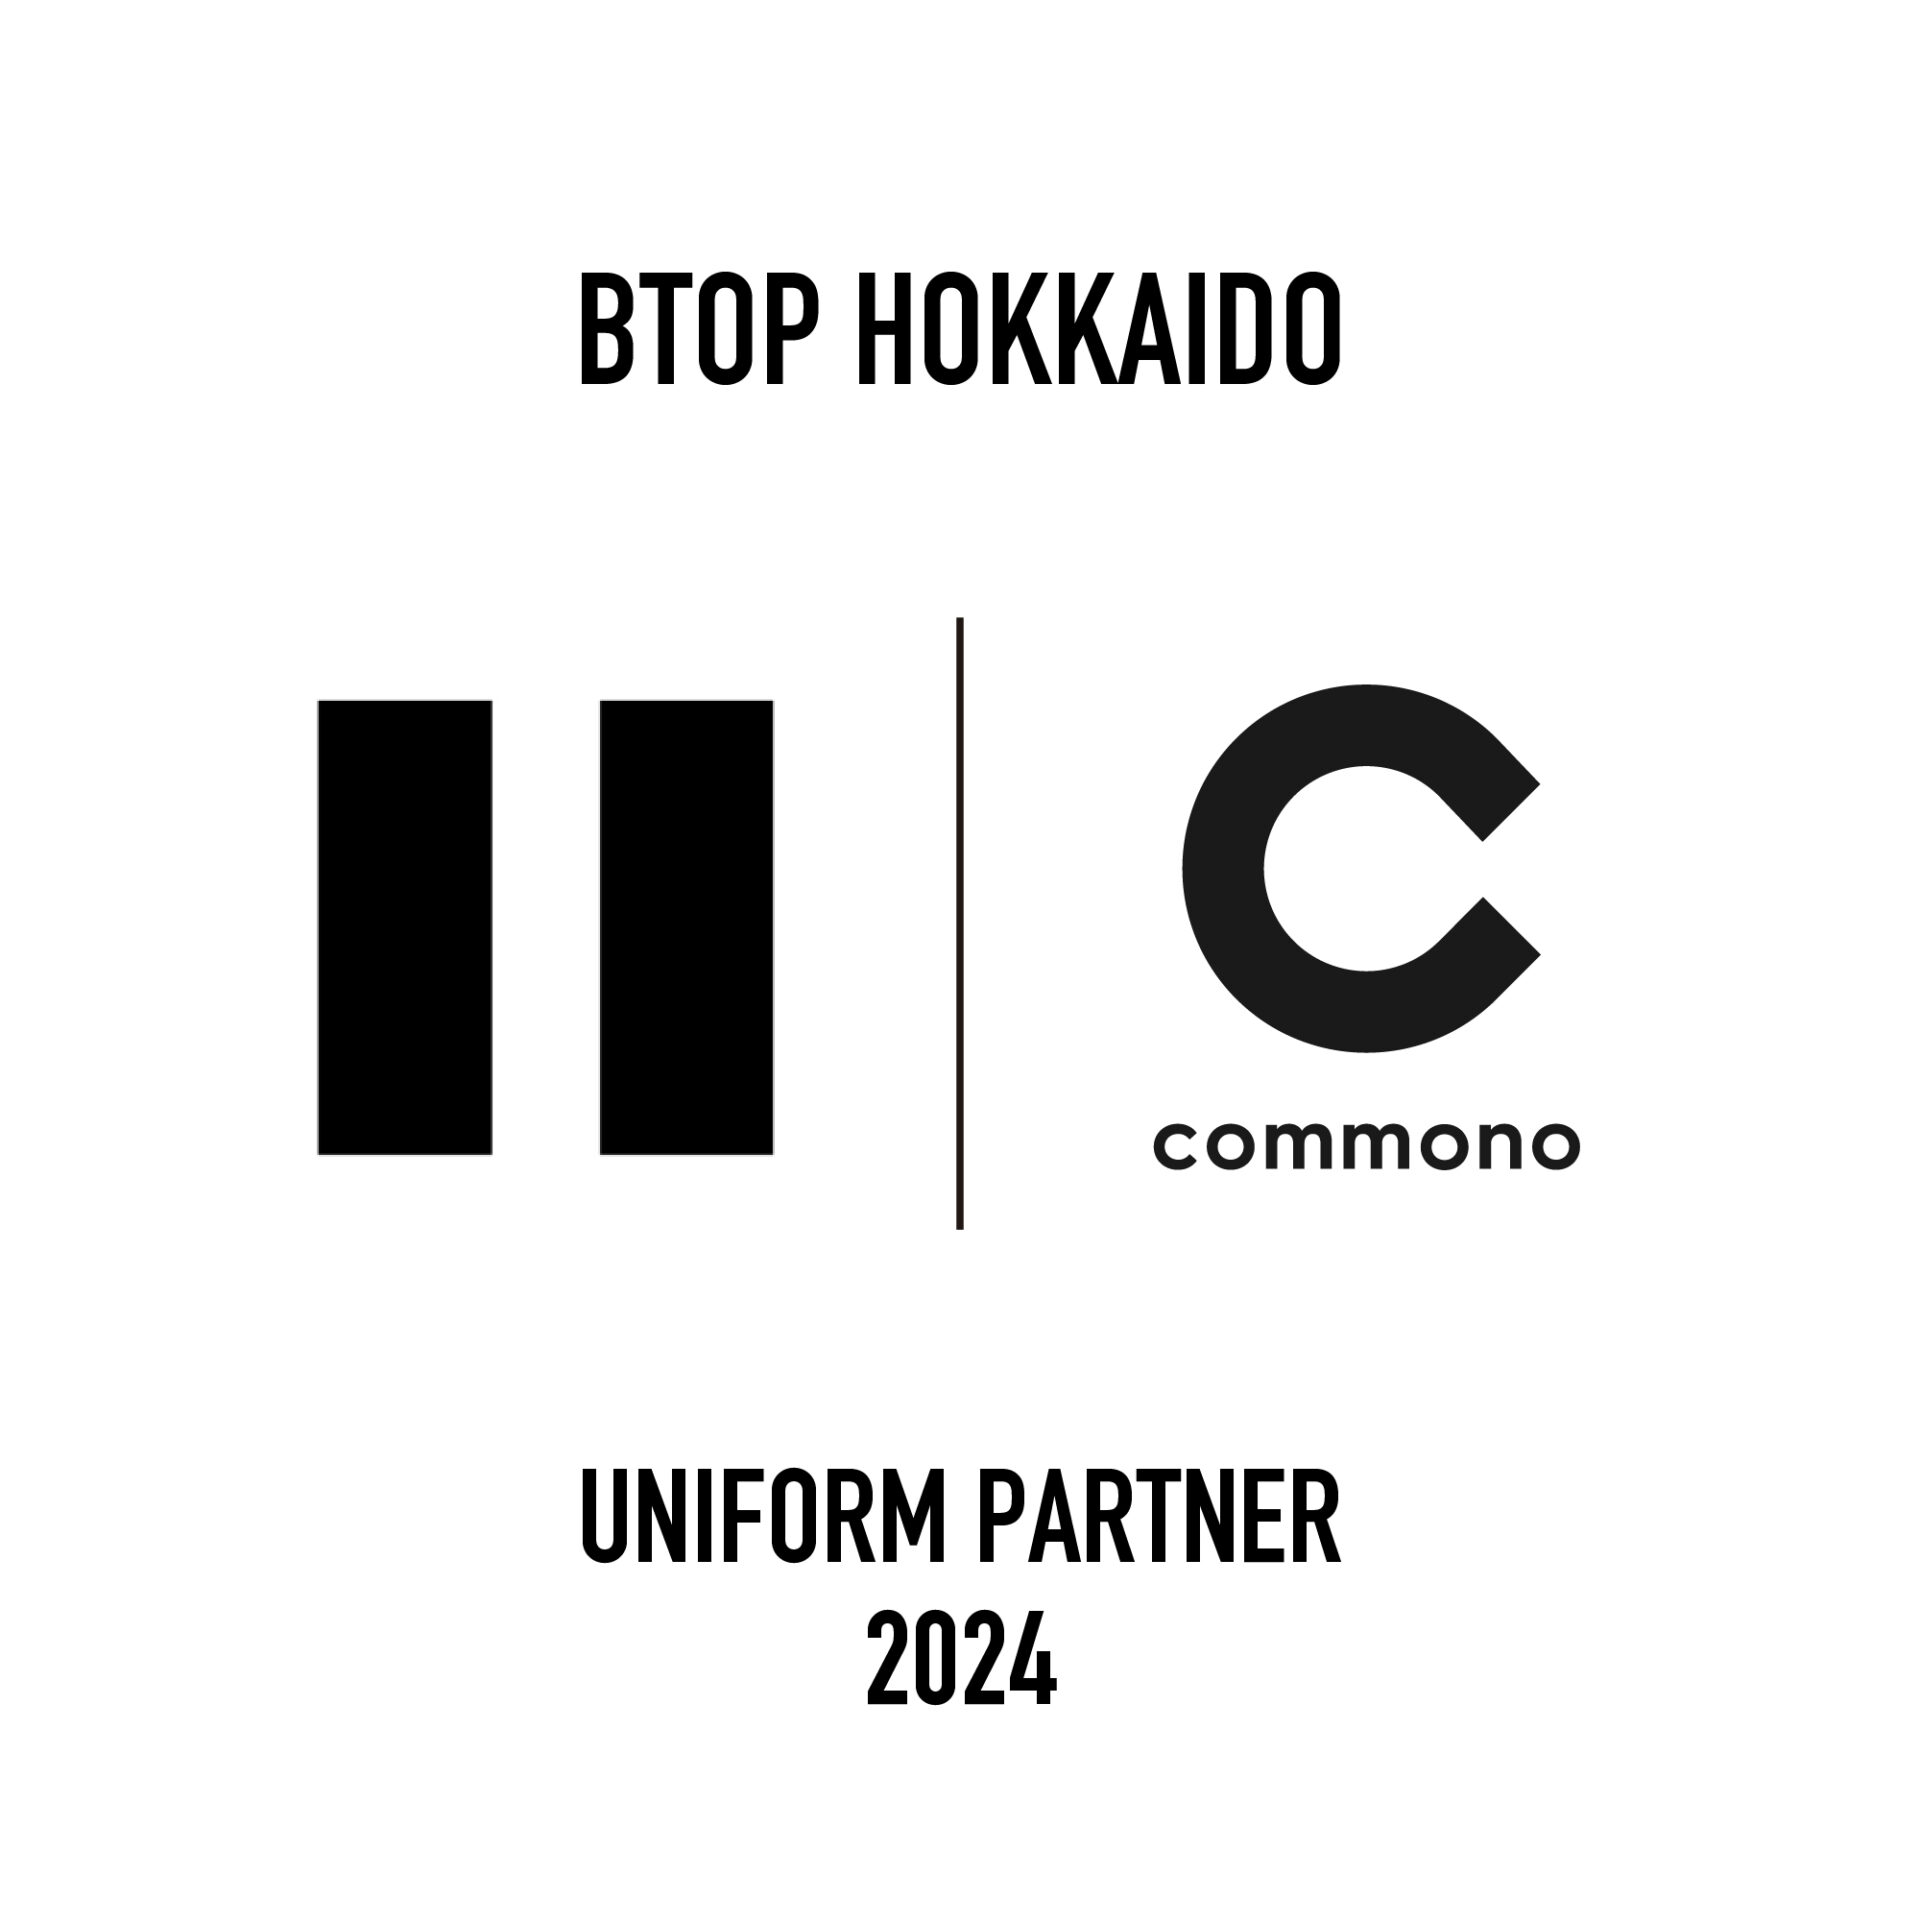 BTOP北海道　ユニフォームパートナー契約締結のお知らせ